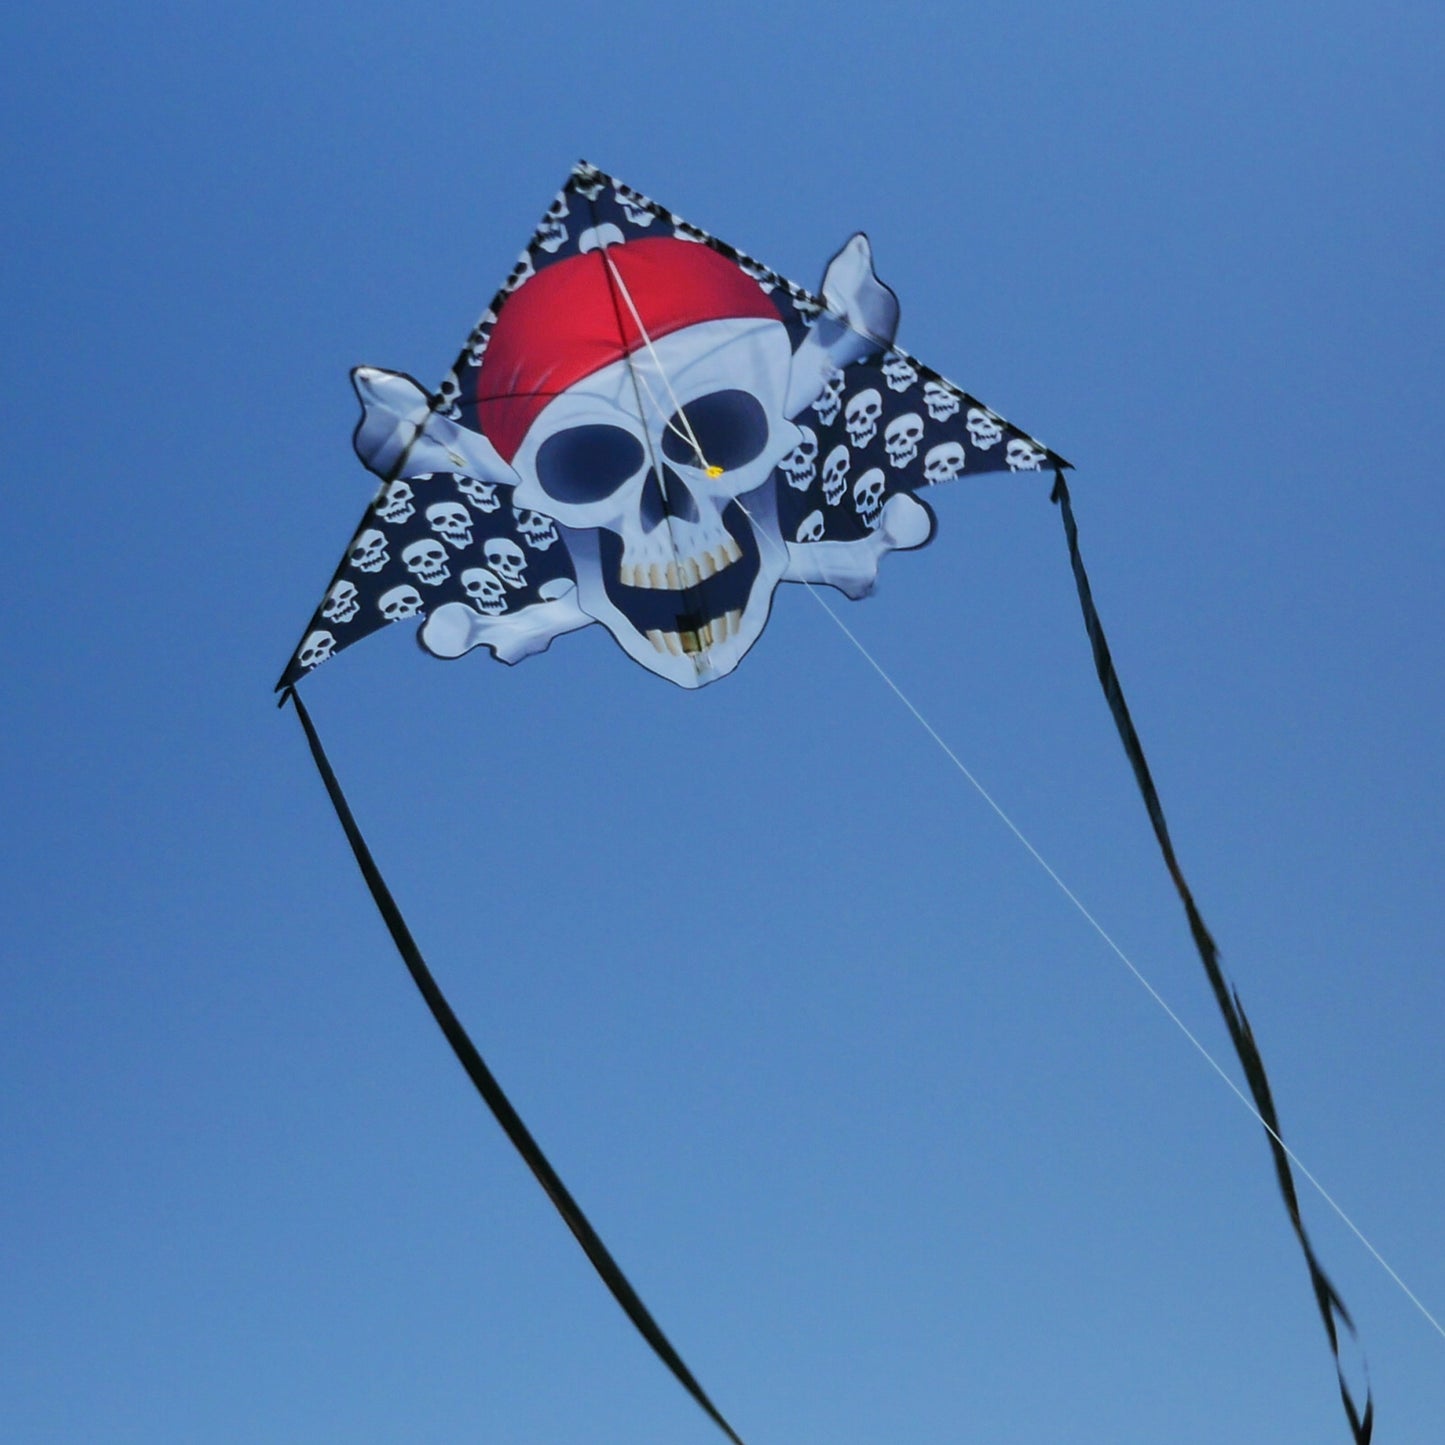 windnsun delta xt skull bones nylon kite flying